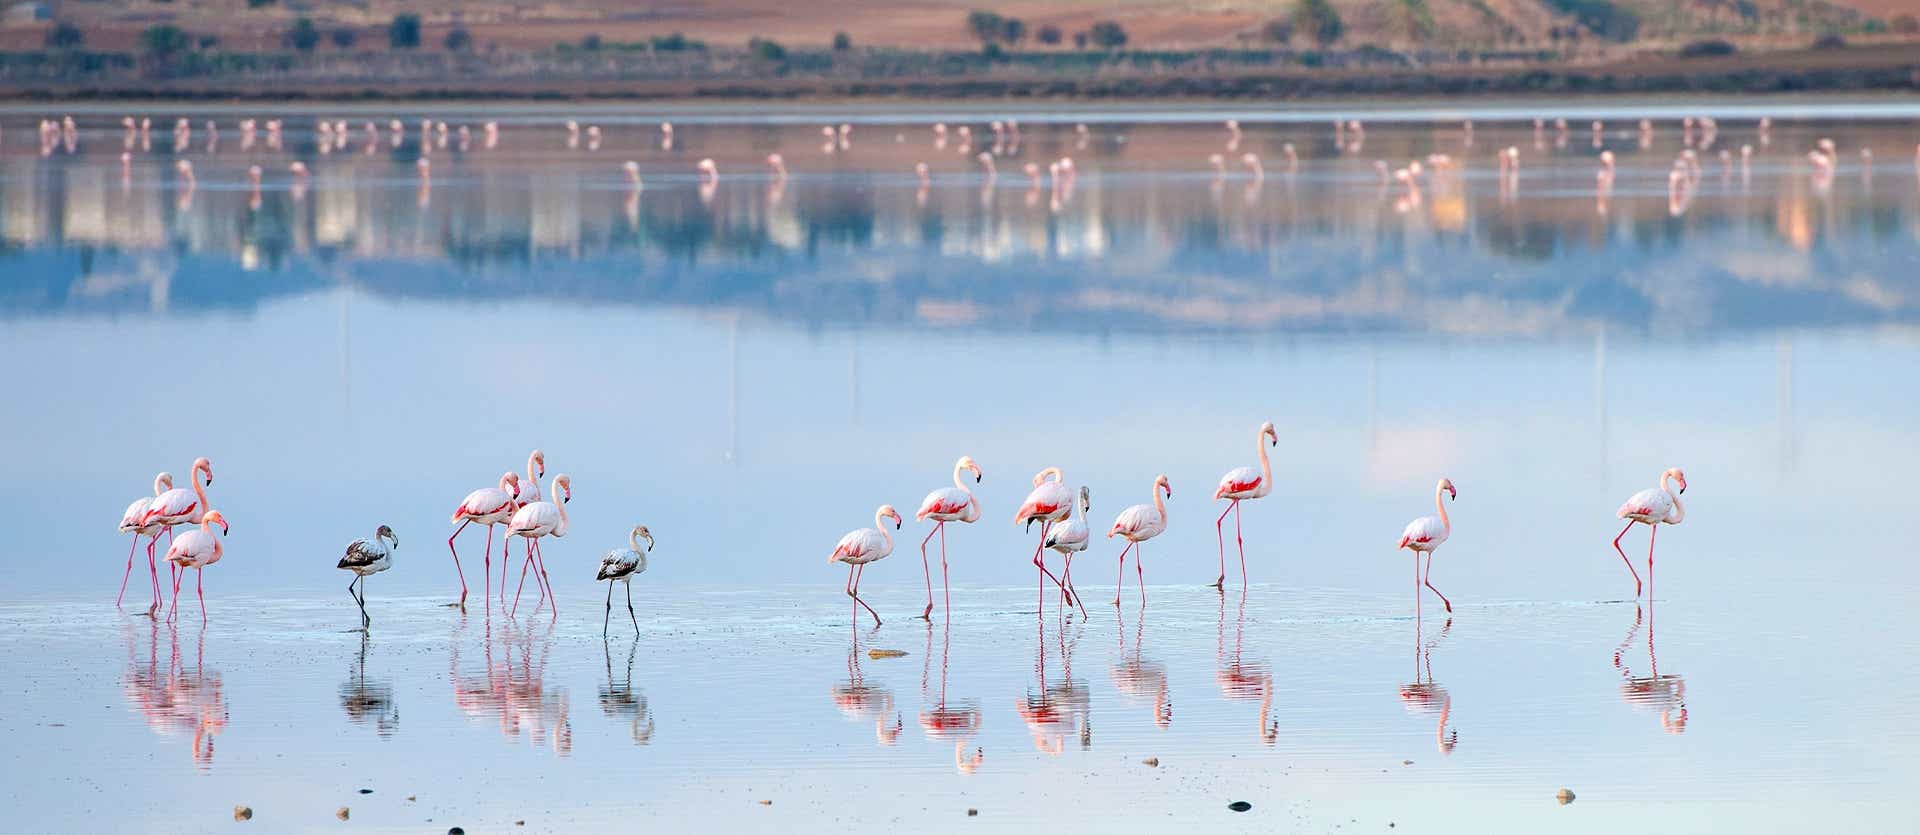 Flamingos <span class="iconos separador"></span> Larnaca Salt Lake